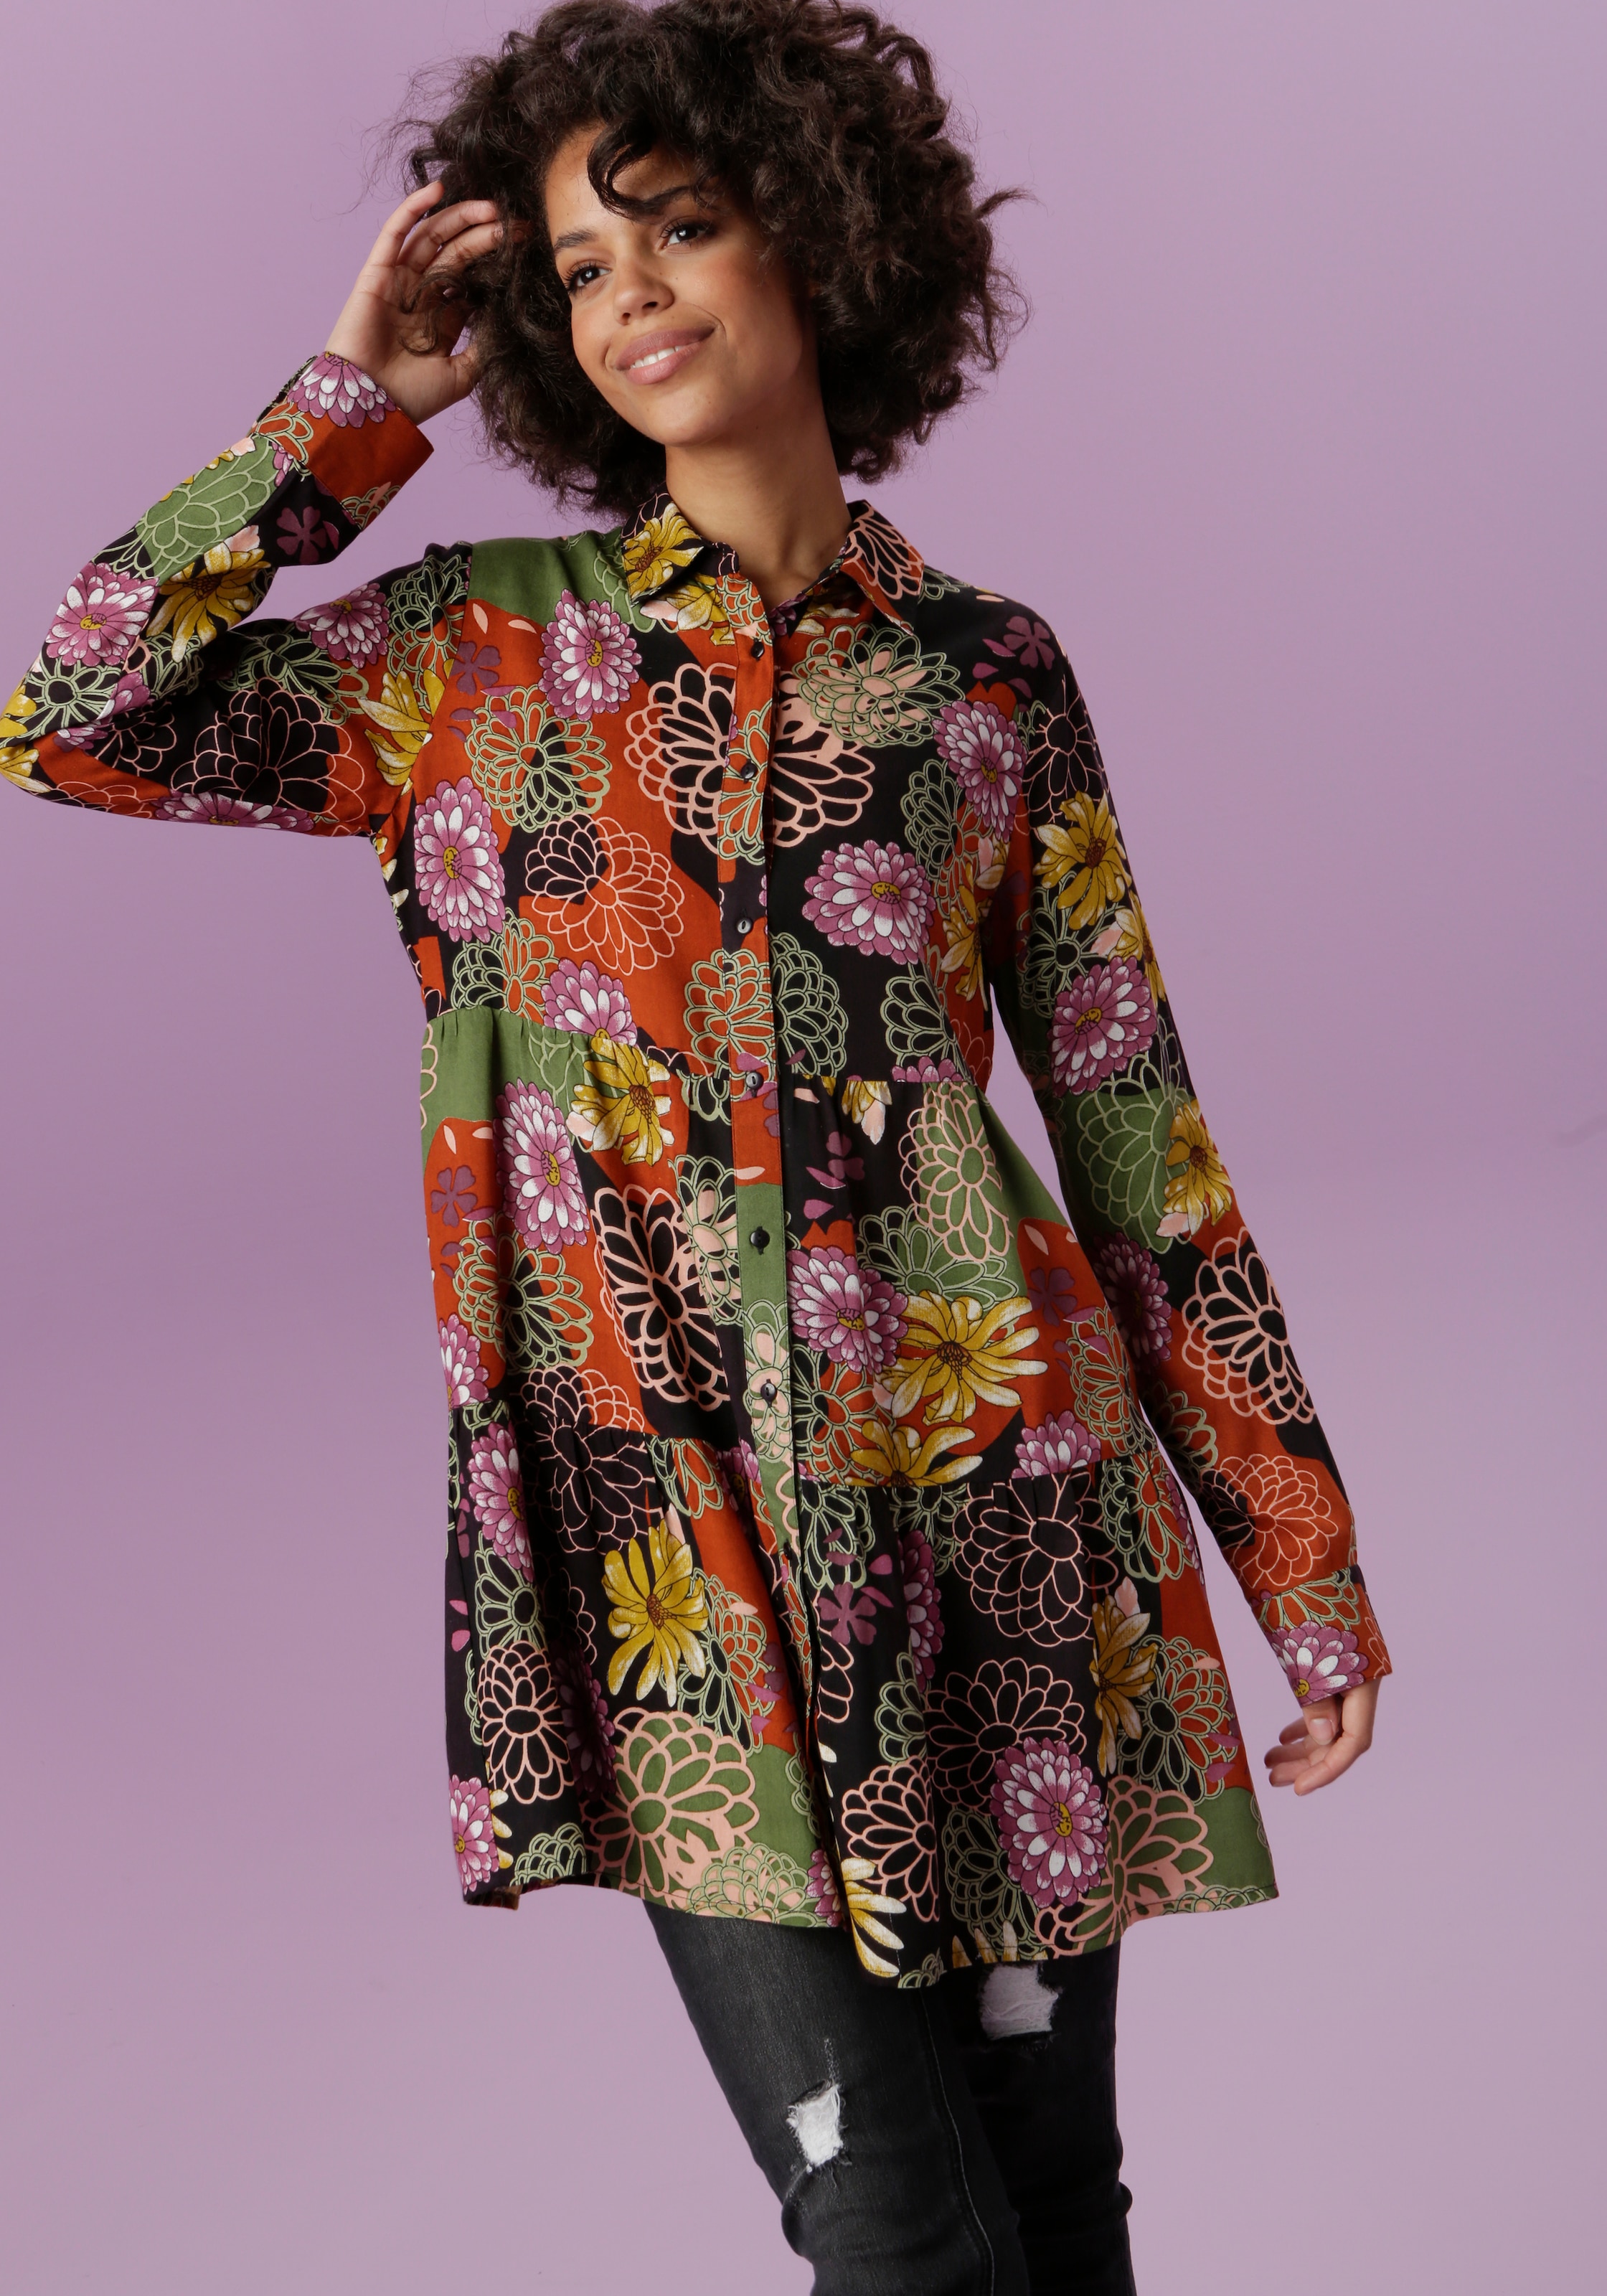 Aniston CASUAL Hemdbluse, mit großflächigem Blütendruck kaufen | I\'m walking